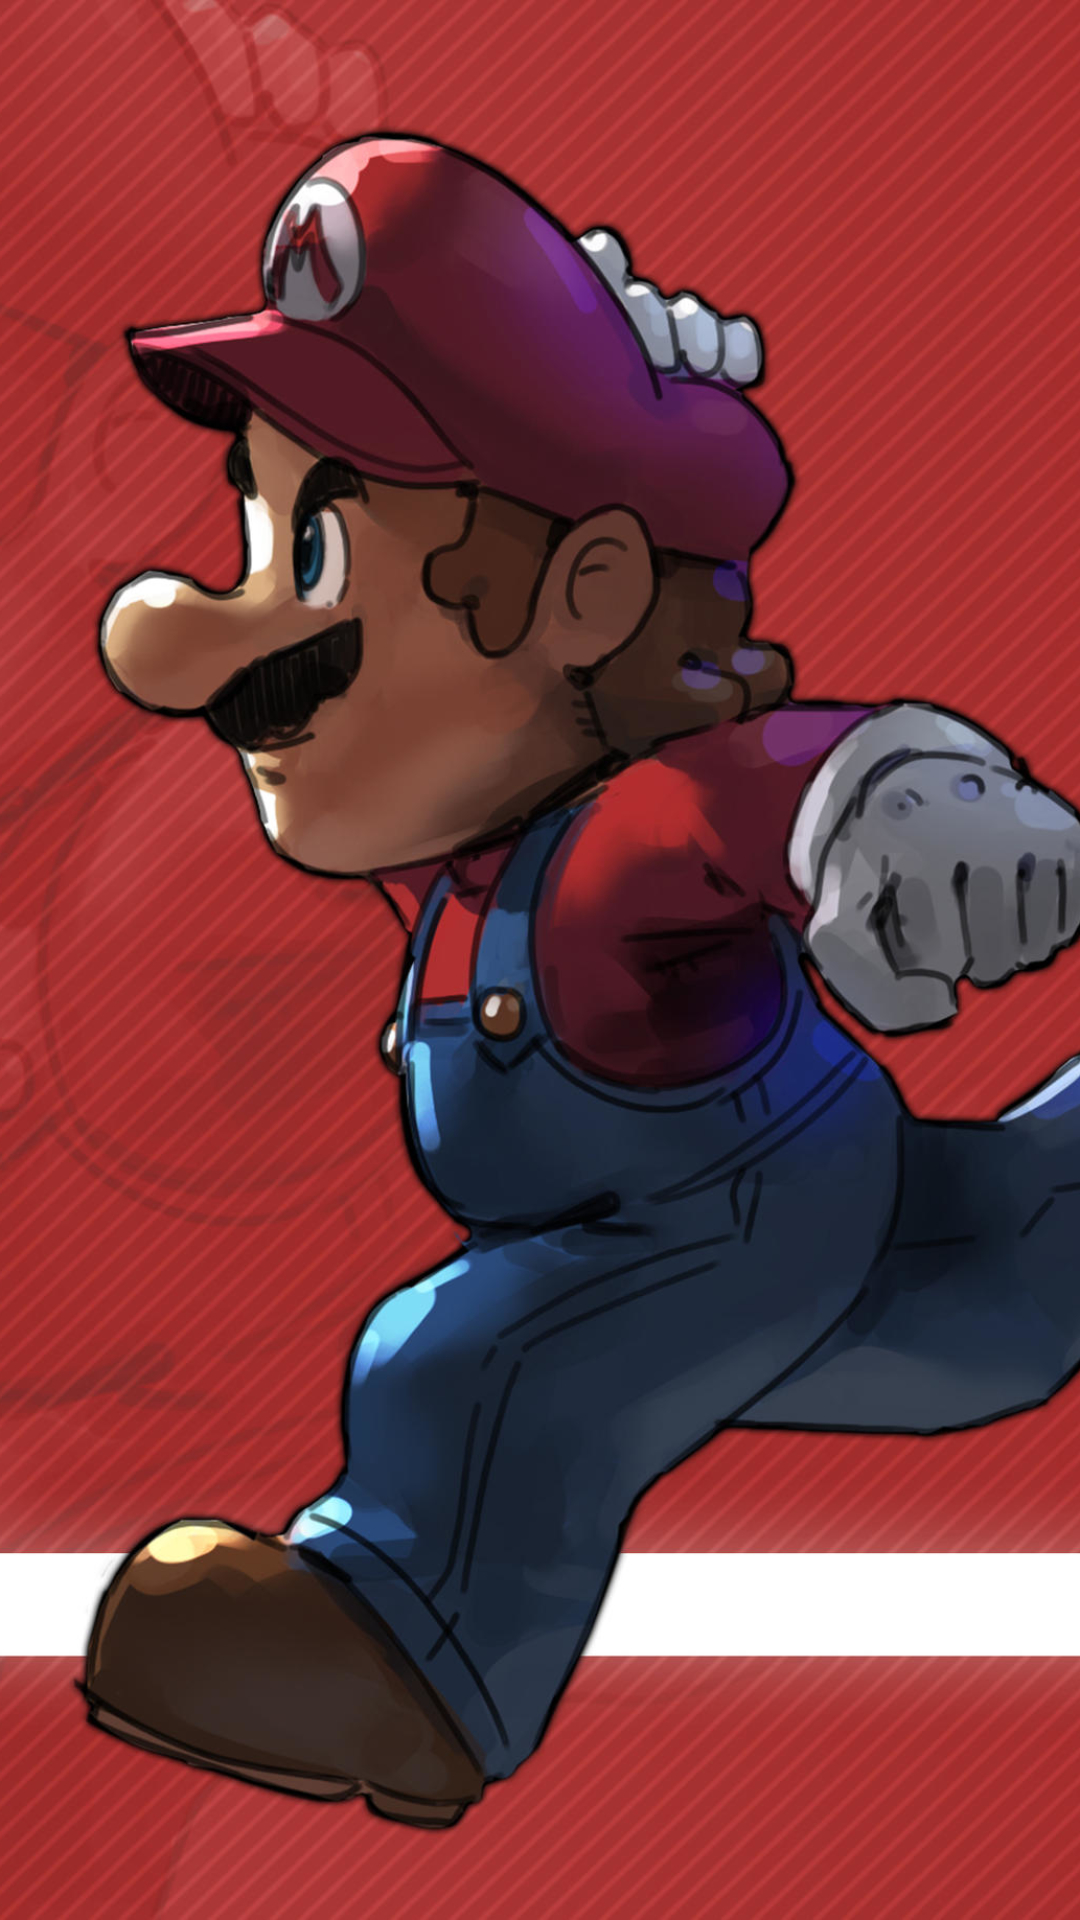 Mario In Super Smash Bros. Ultimate by Callum Nakajima